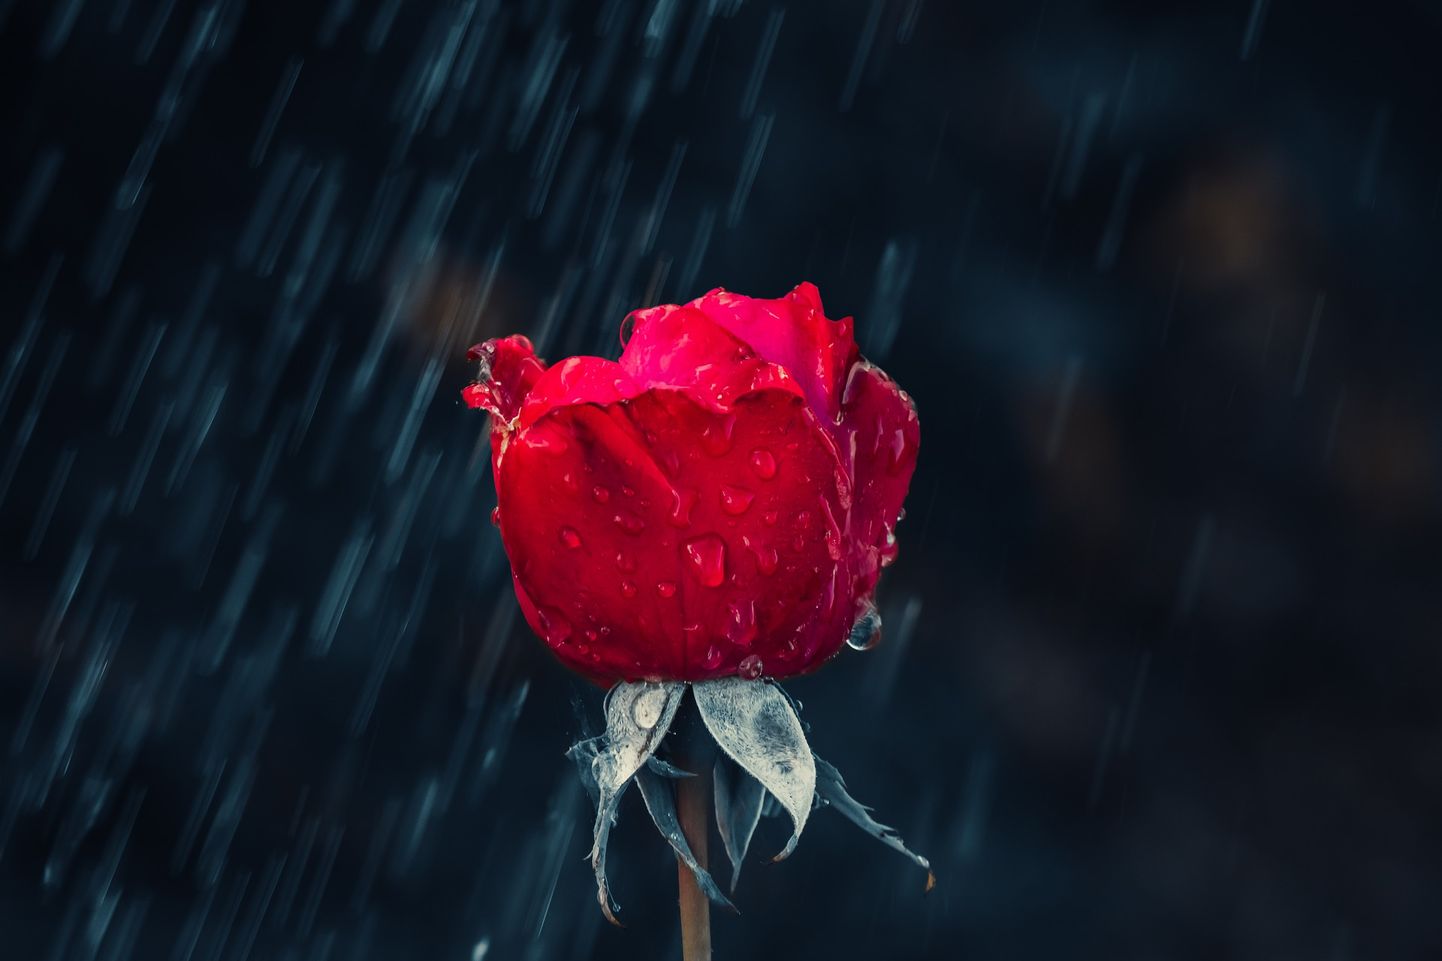 Роза под дождем. Иллюстративное фото.